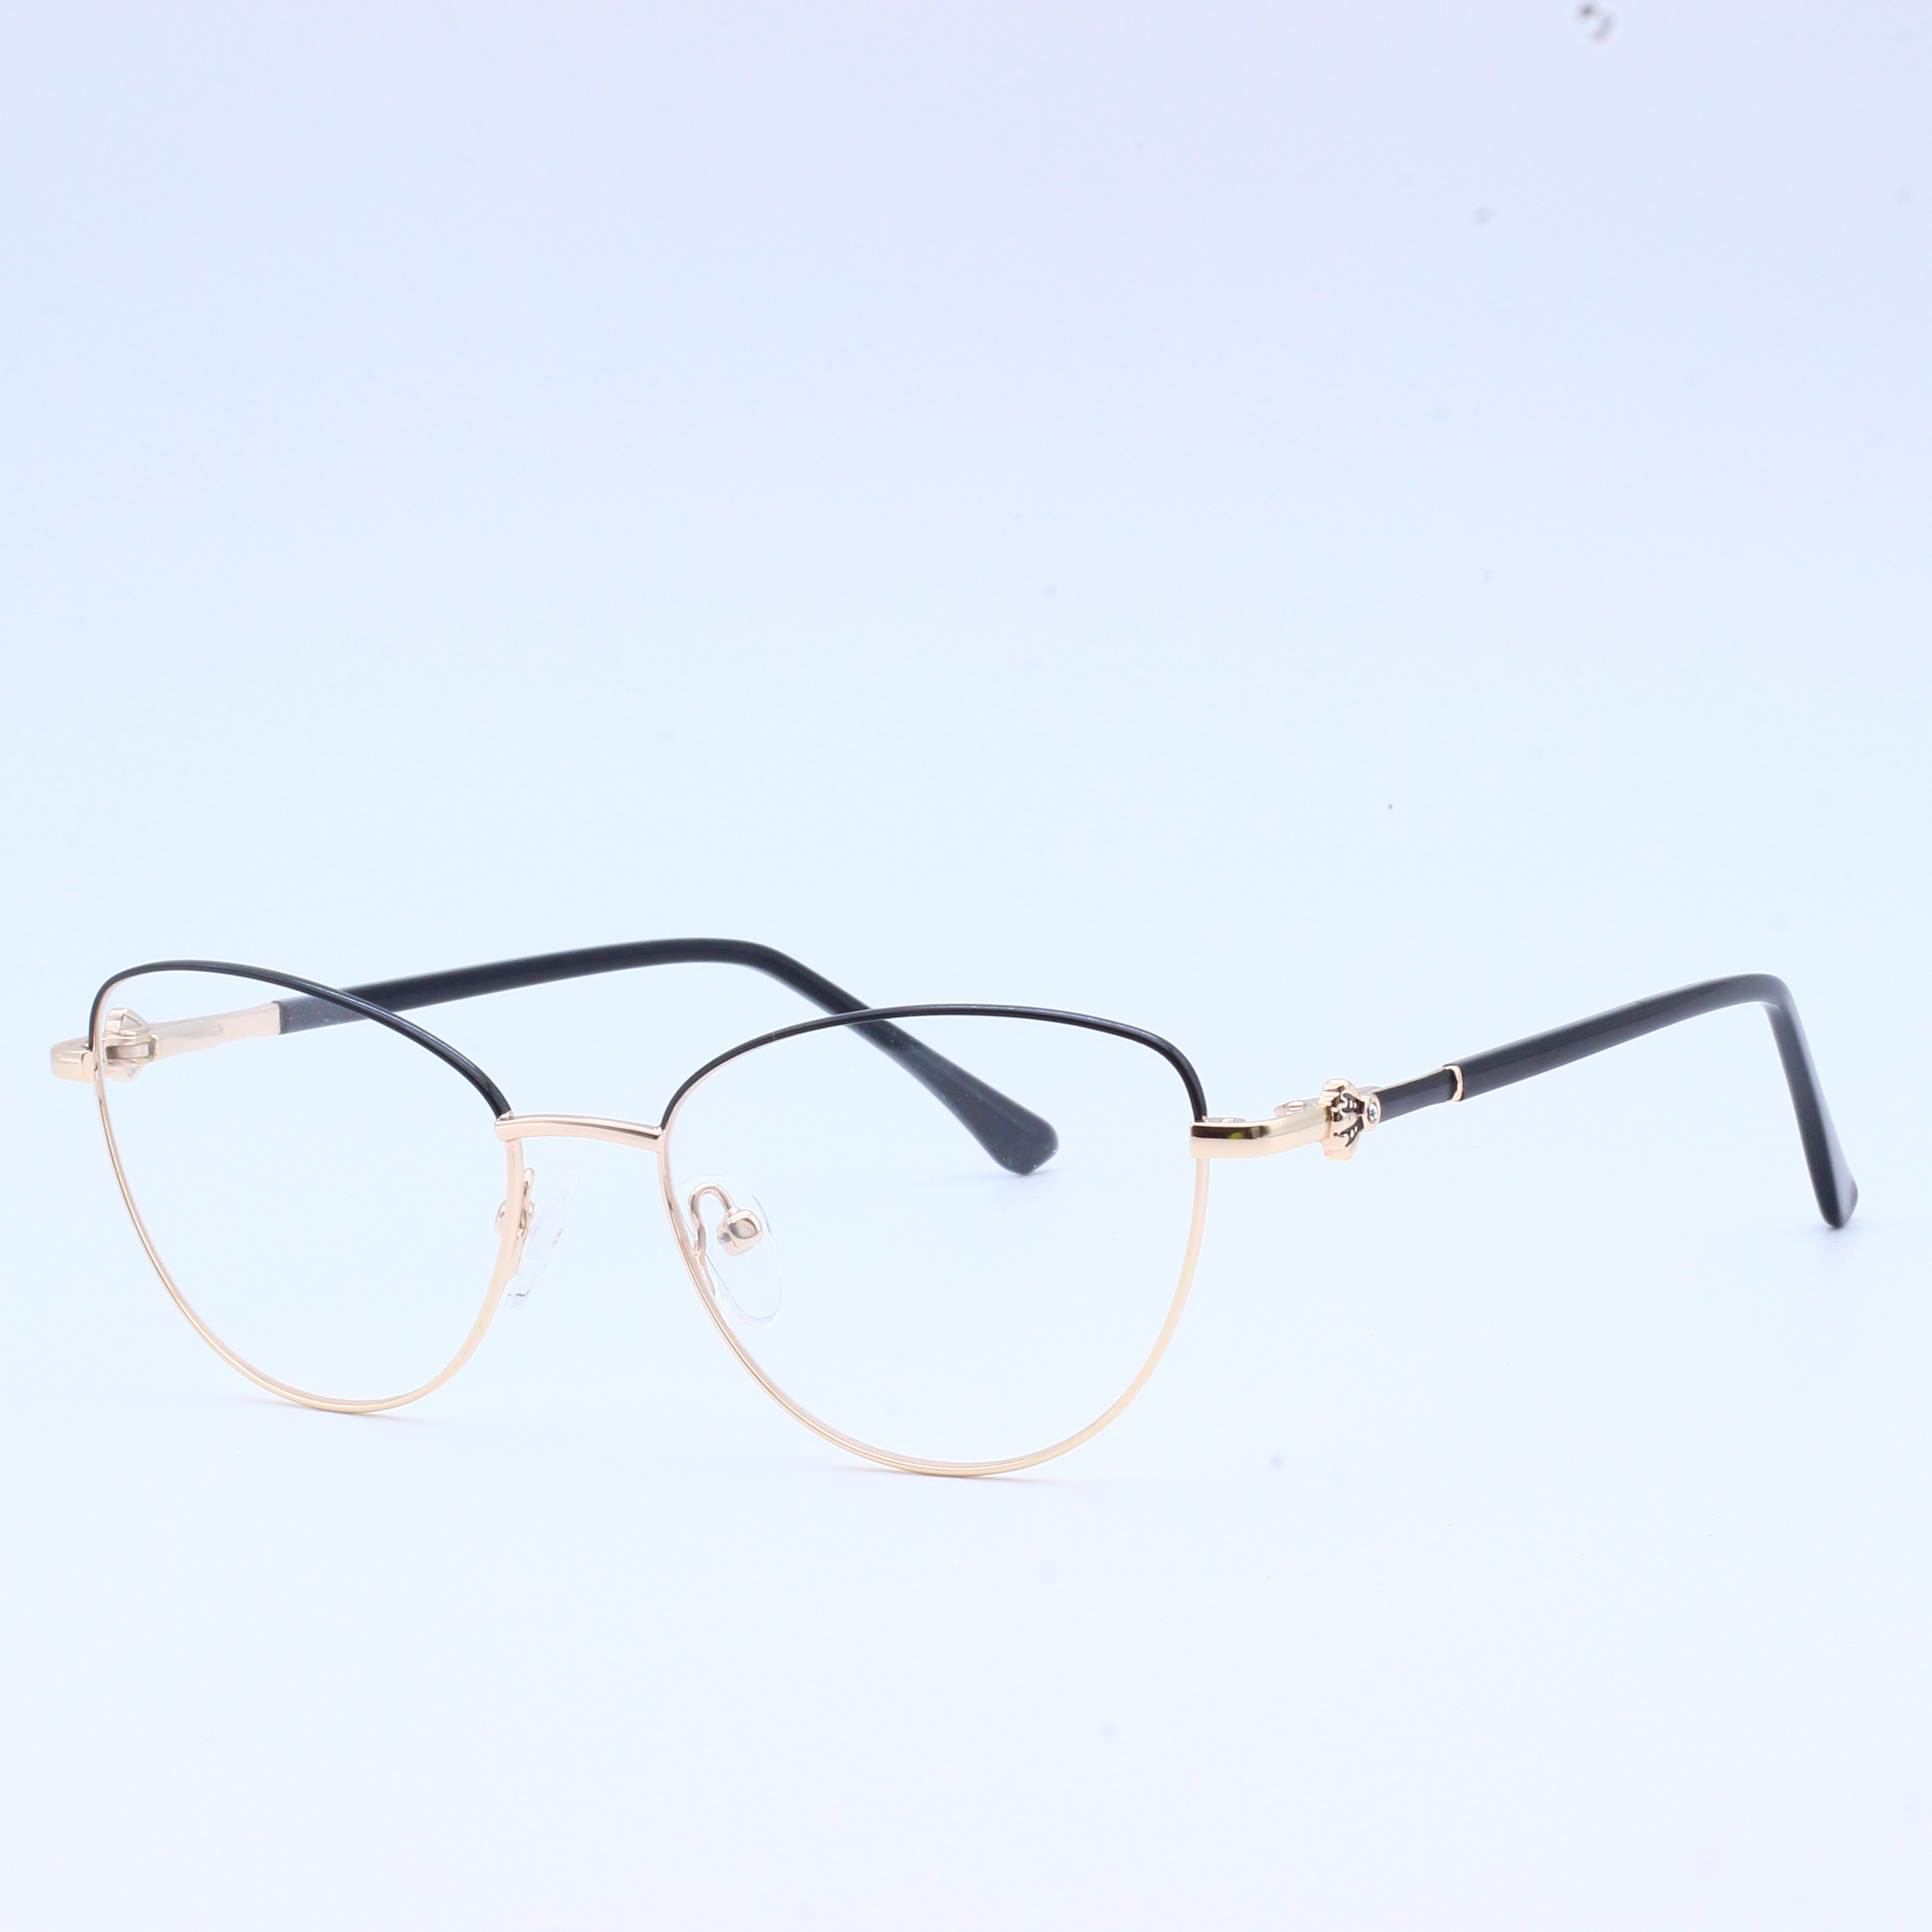 Metal Spring Hinge Cat Eye Glasses Frames (5)